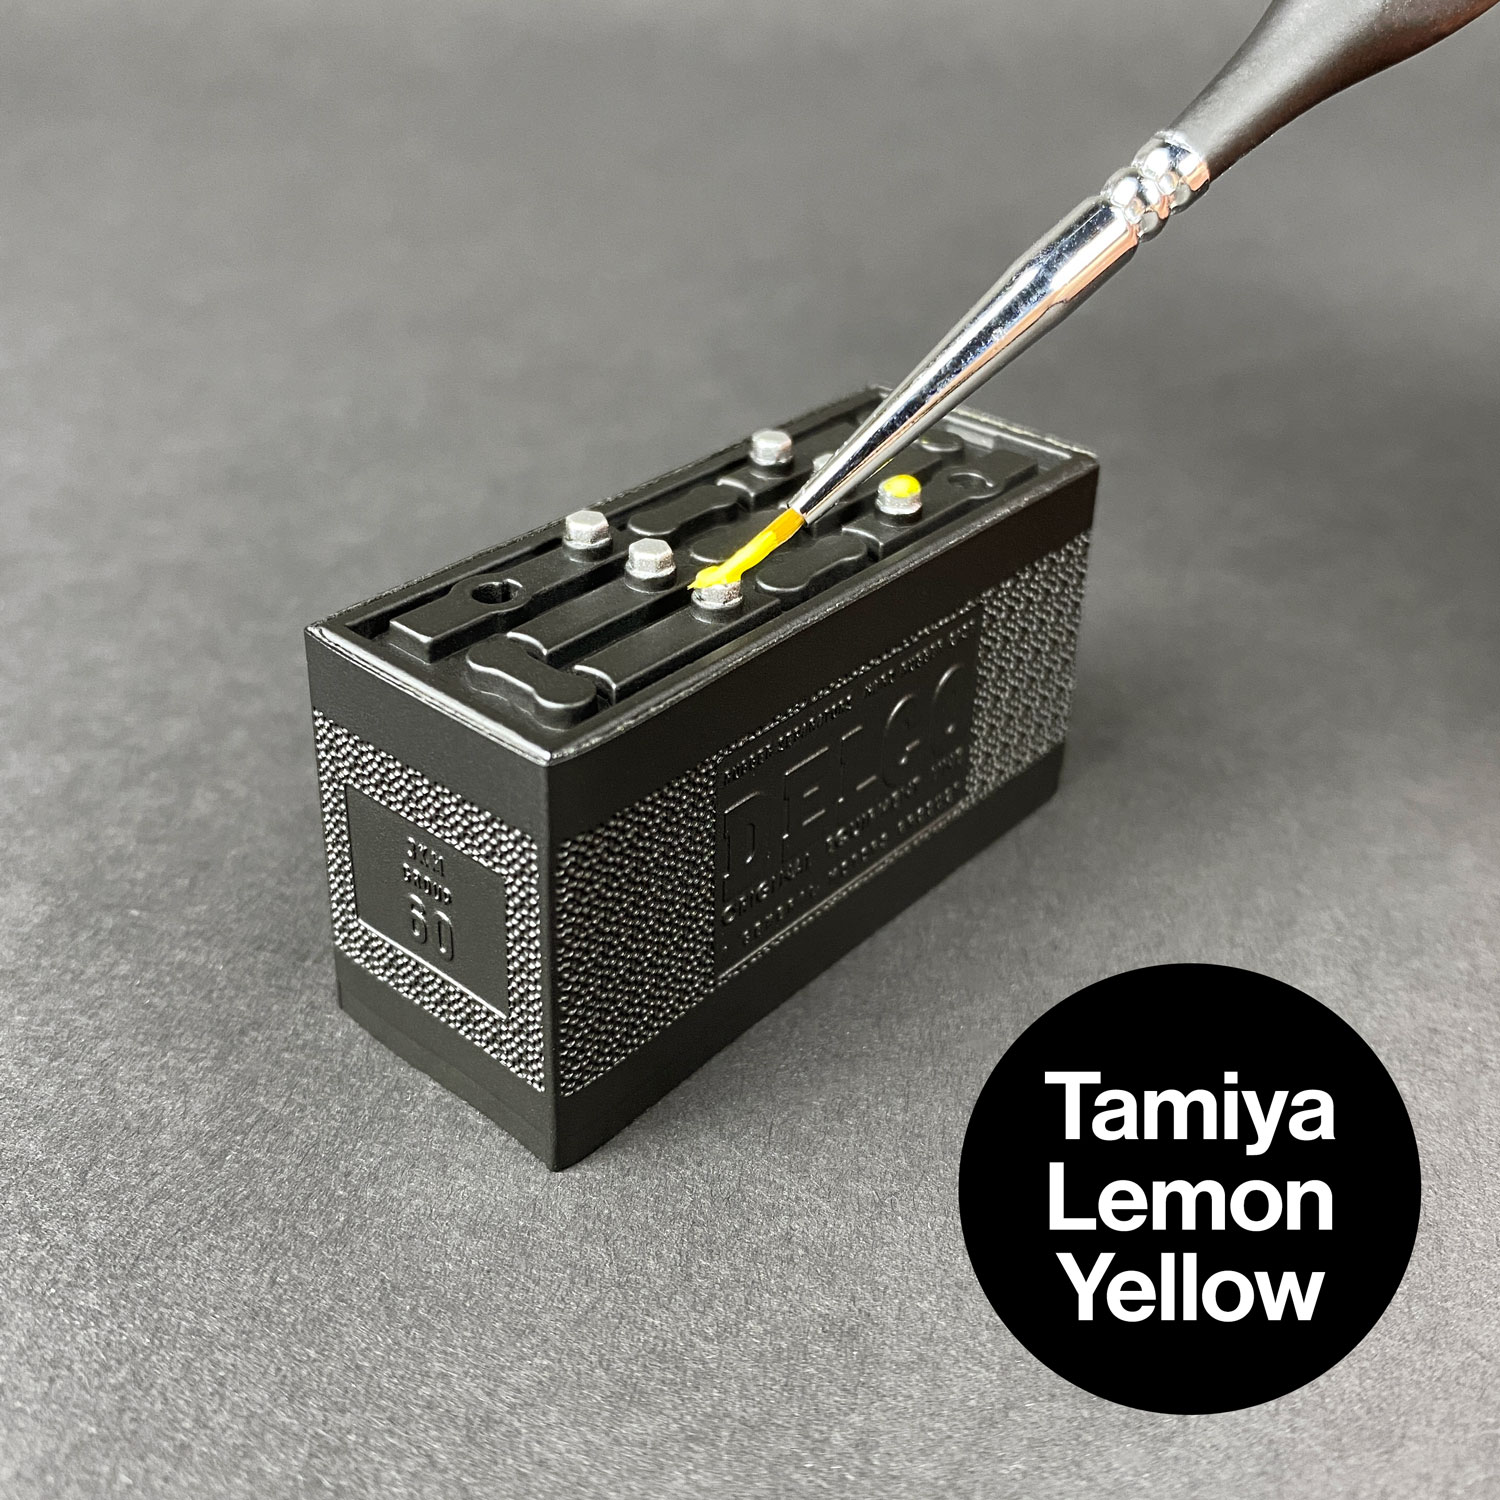 Painting Ecto-1 battery caps with Tamiya Lemon Yellow